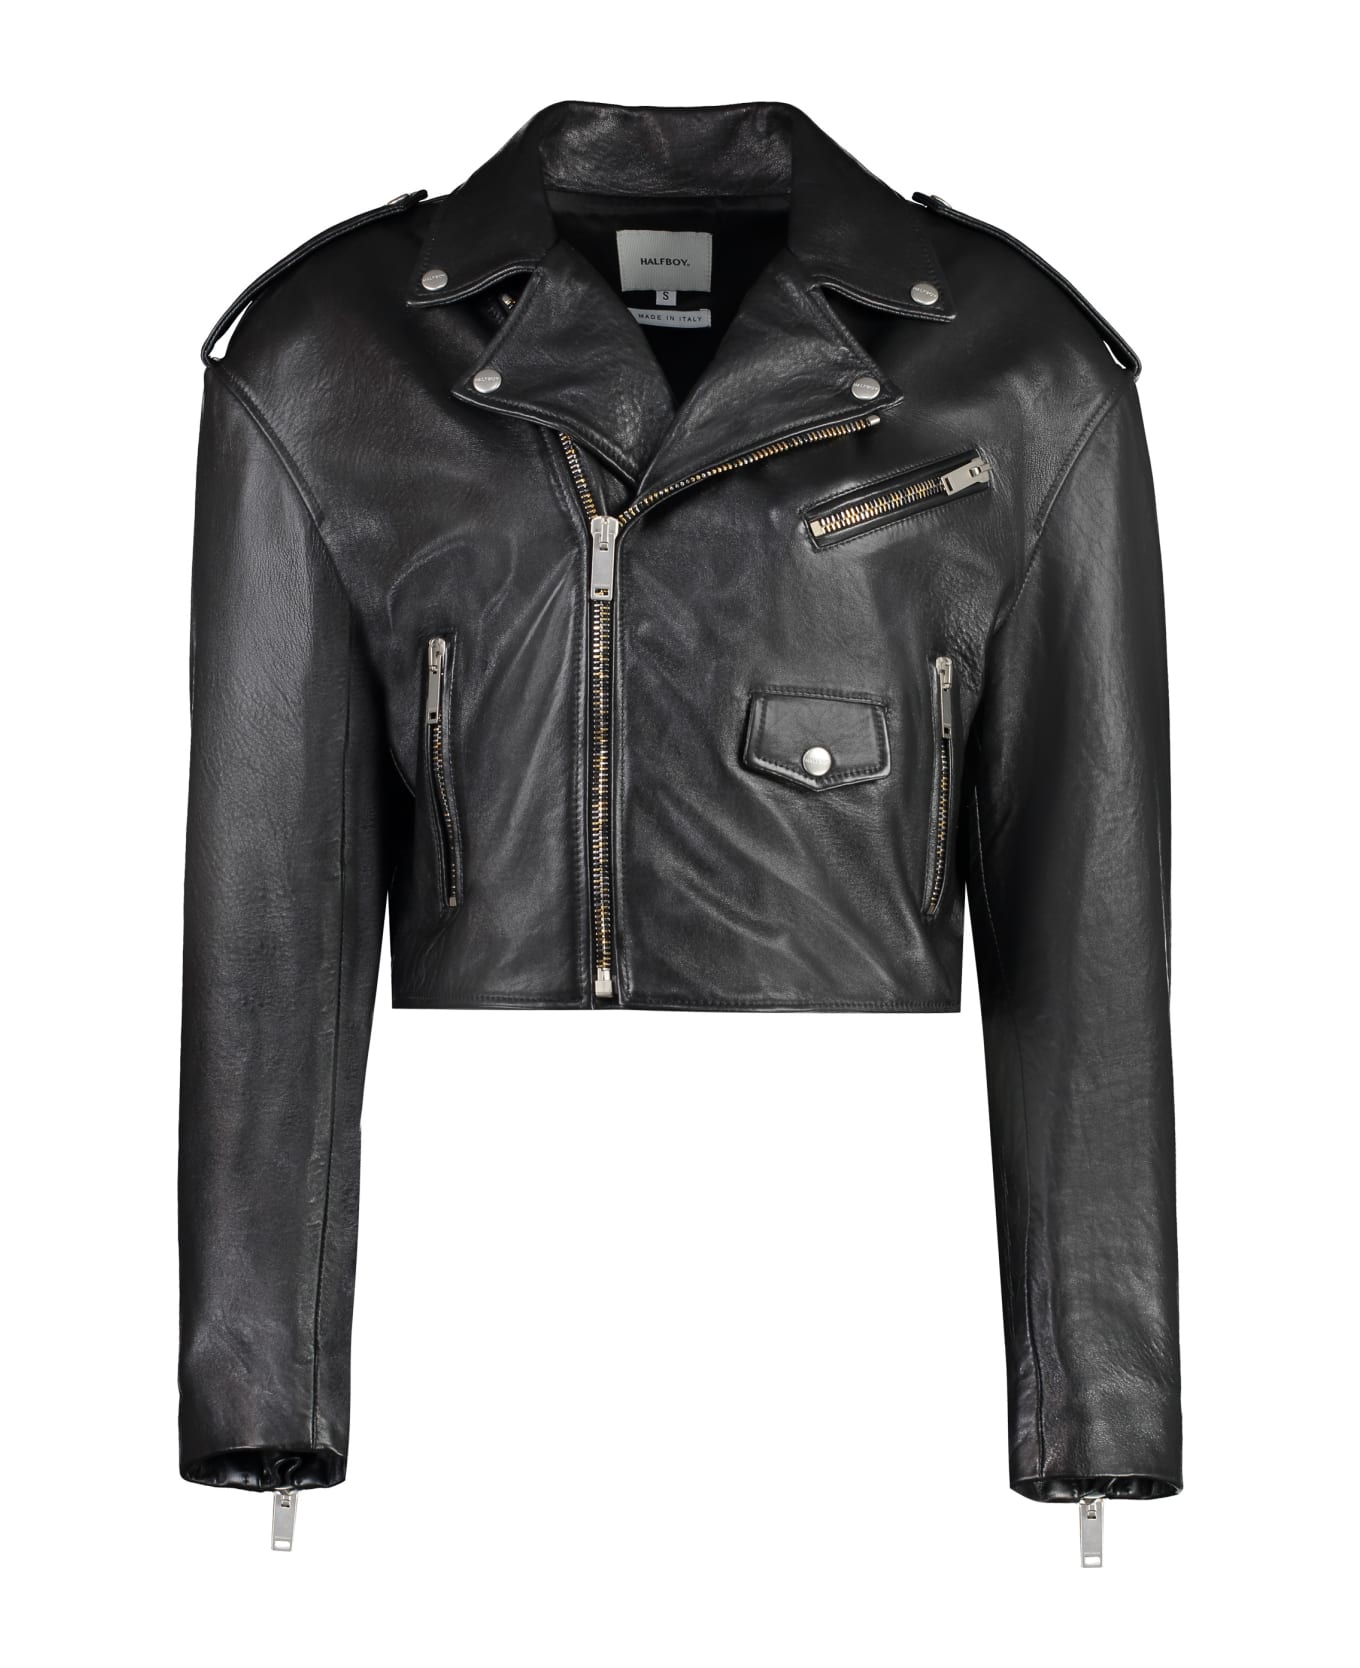 HALFBOY Leather Jacket - black